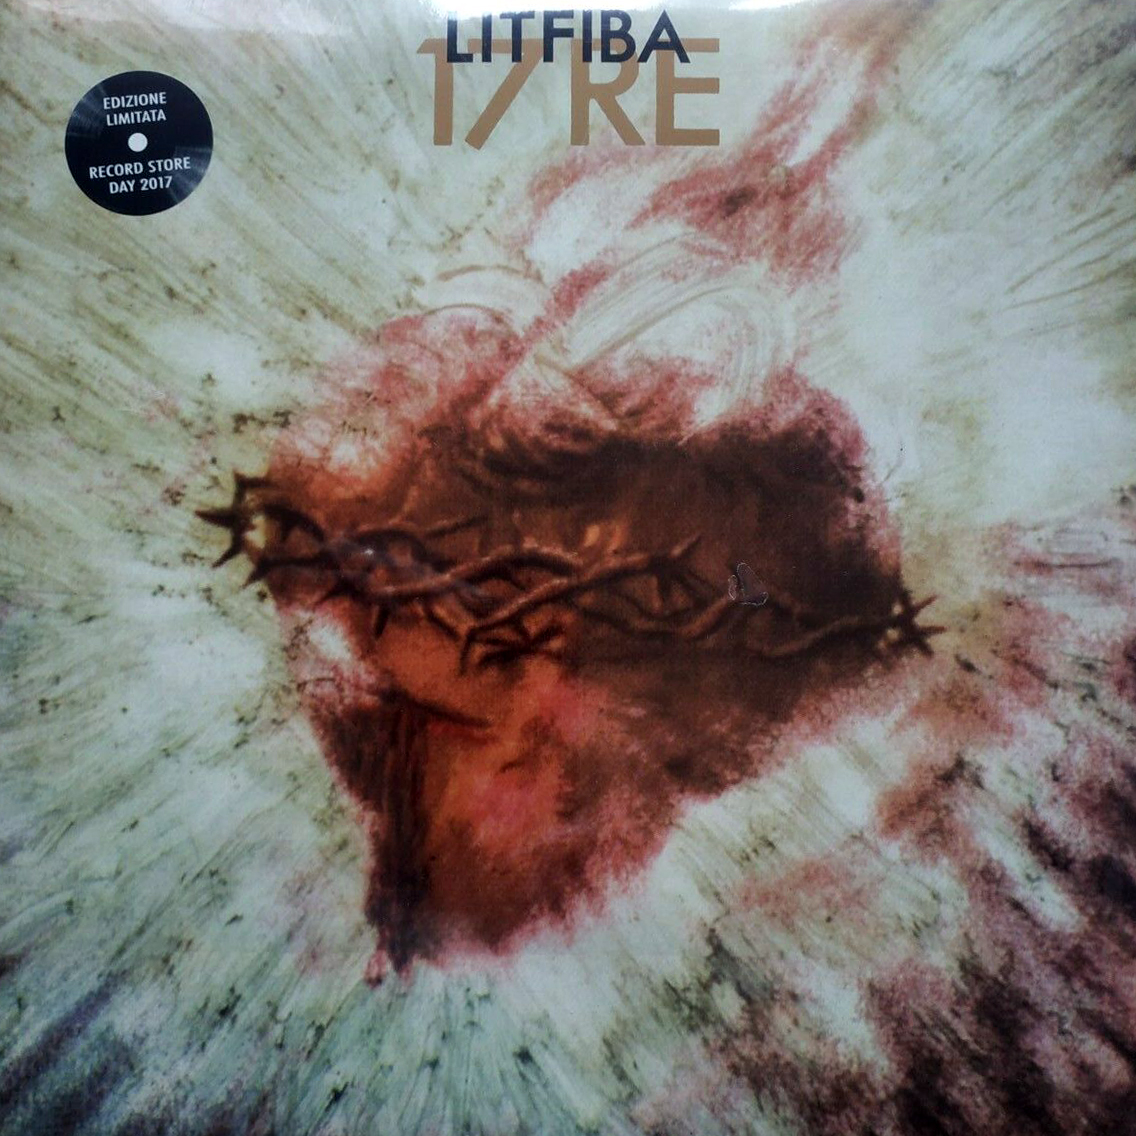 17 re - Litfiba - litfibaunofficial.it